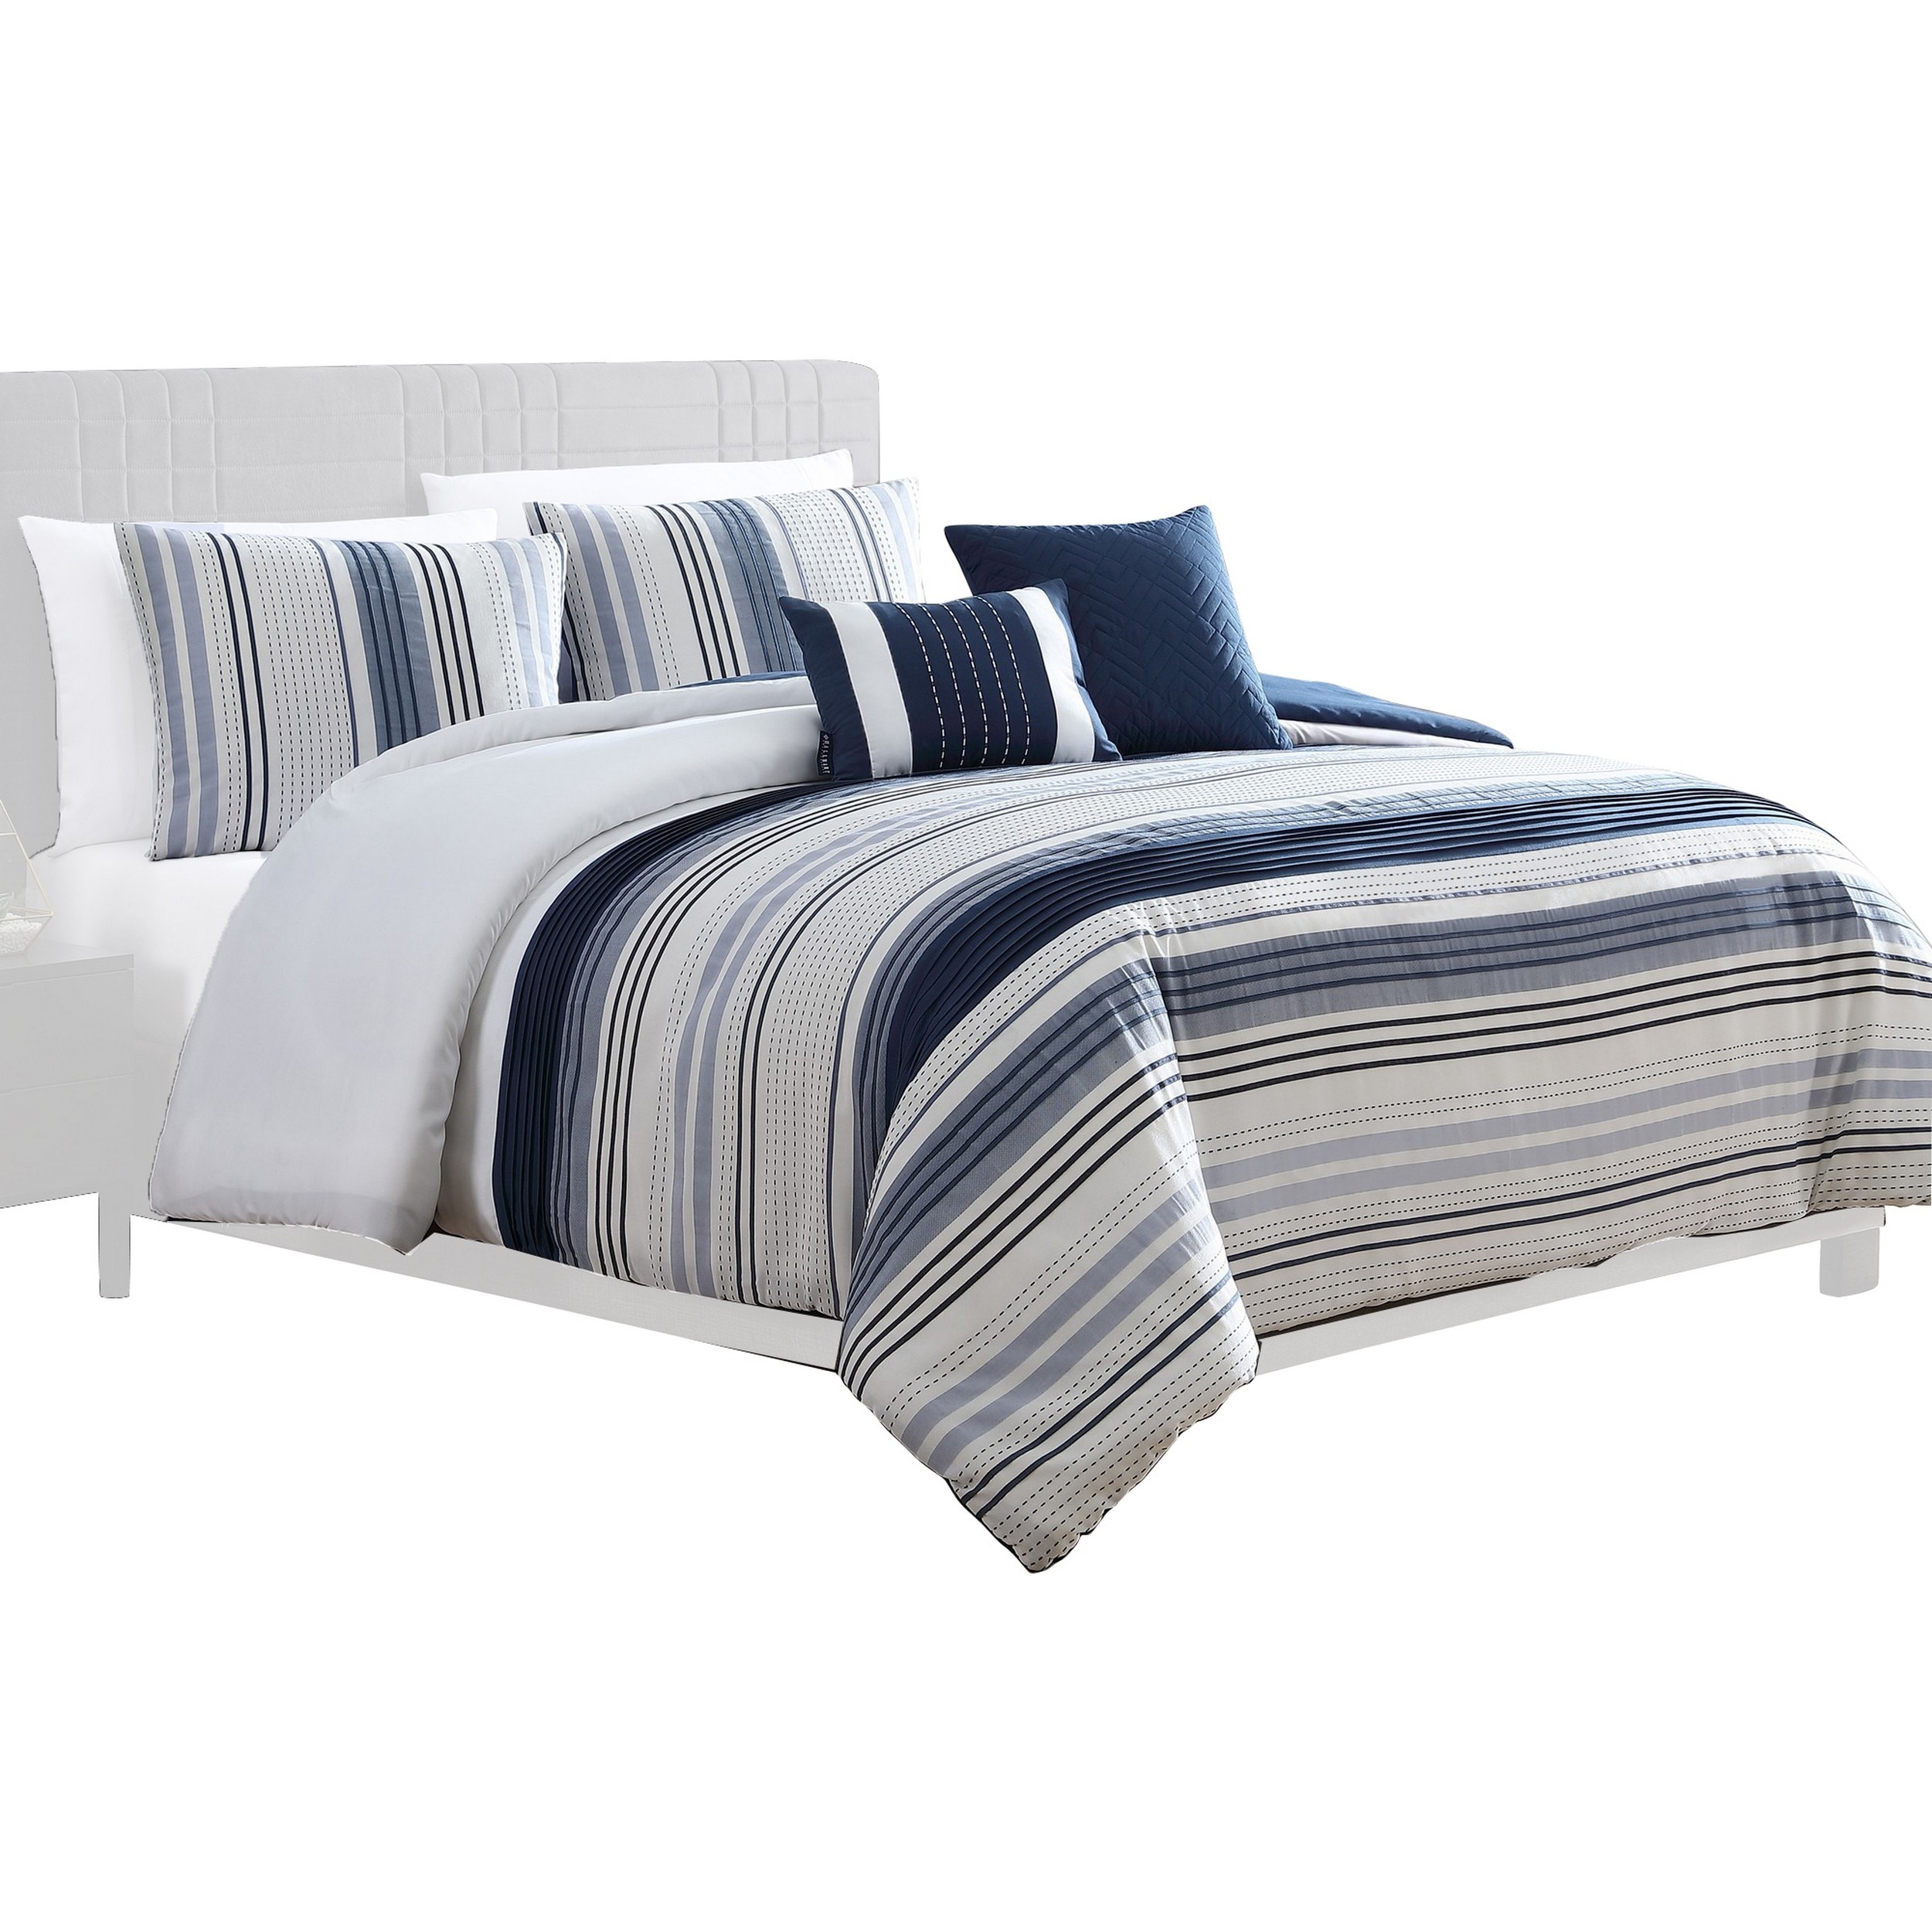 Alfa 5 Piece King Comforter Set, Jacquard Woven Stripes, Blue, White